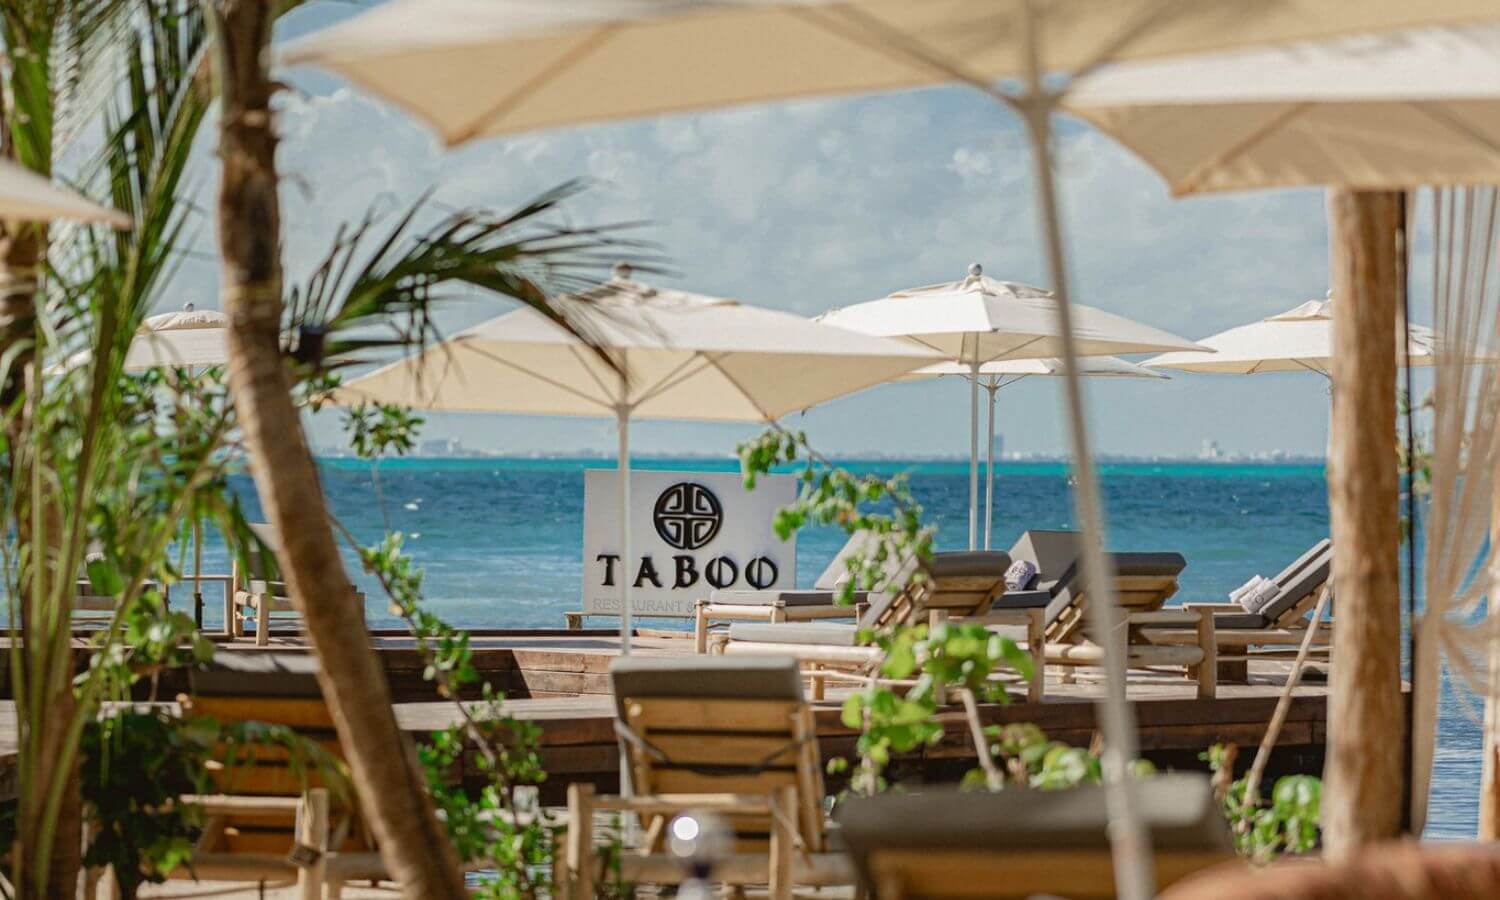 Looking through Taboo beach club towards the ocean